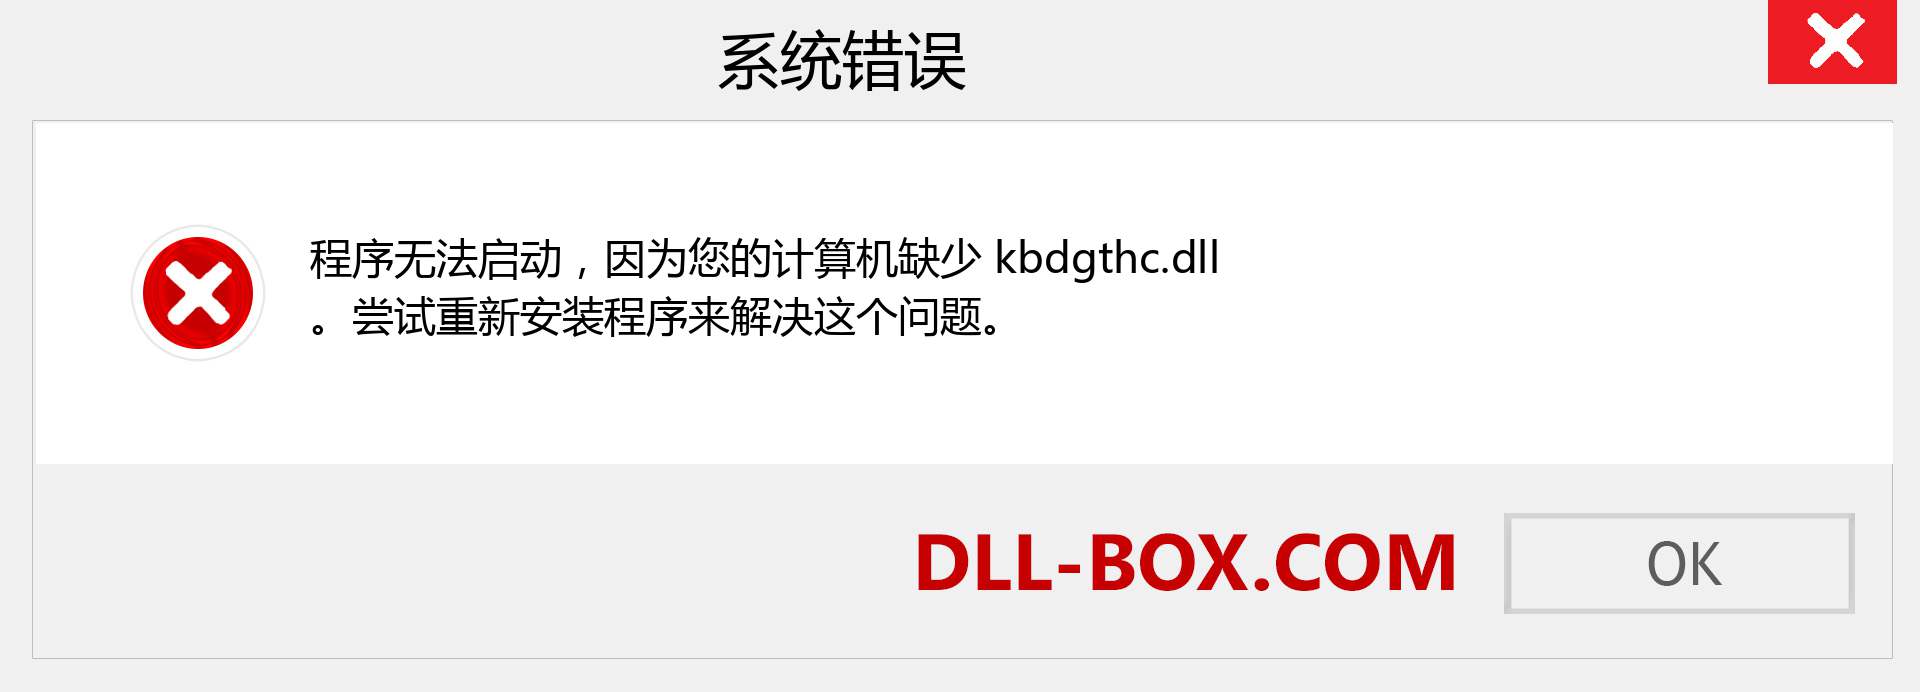 kbdgthc.dll 文件丢失？。 适用于 Windows 7、8、10 的下载 - 修复 Windows、照片、图像上的 kbdgthc dll 丢失错误